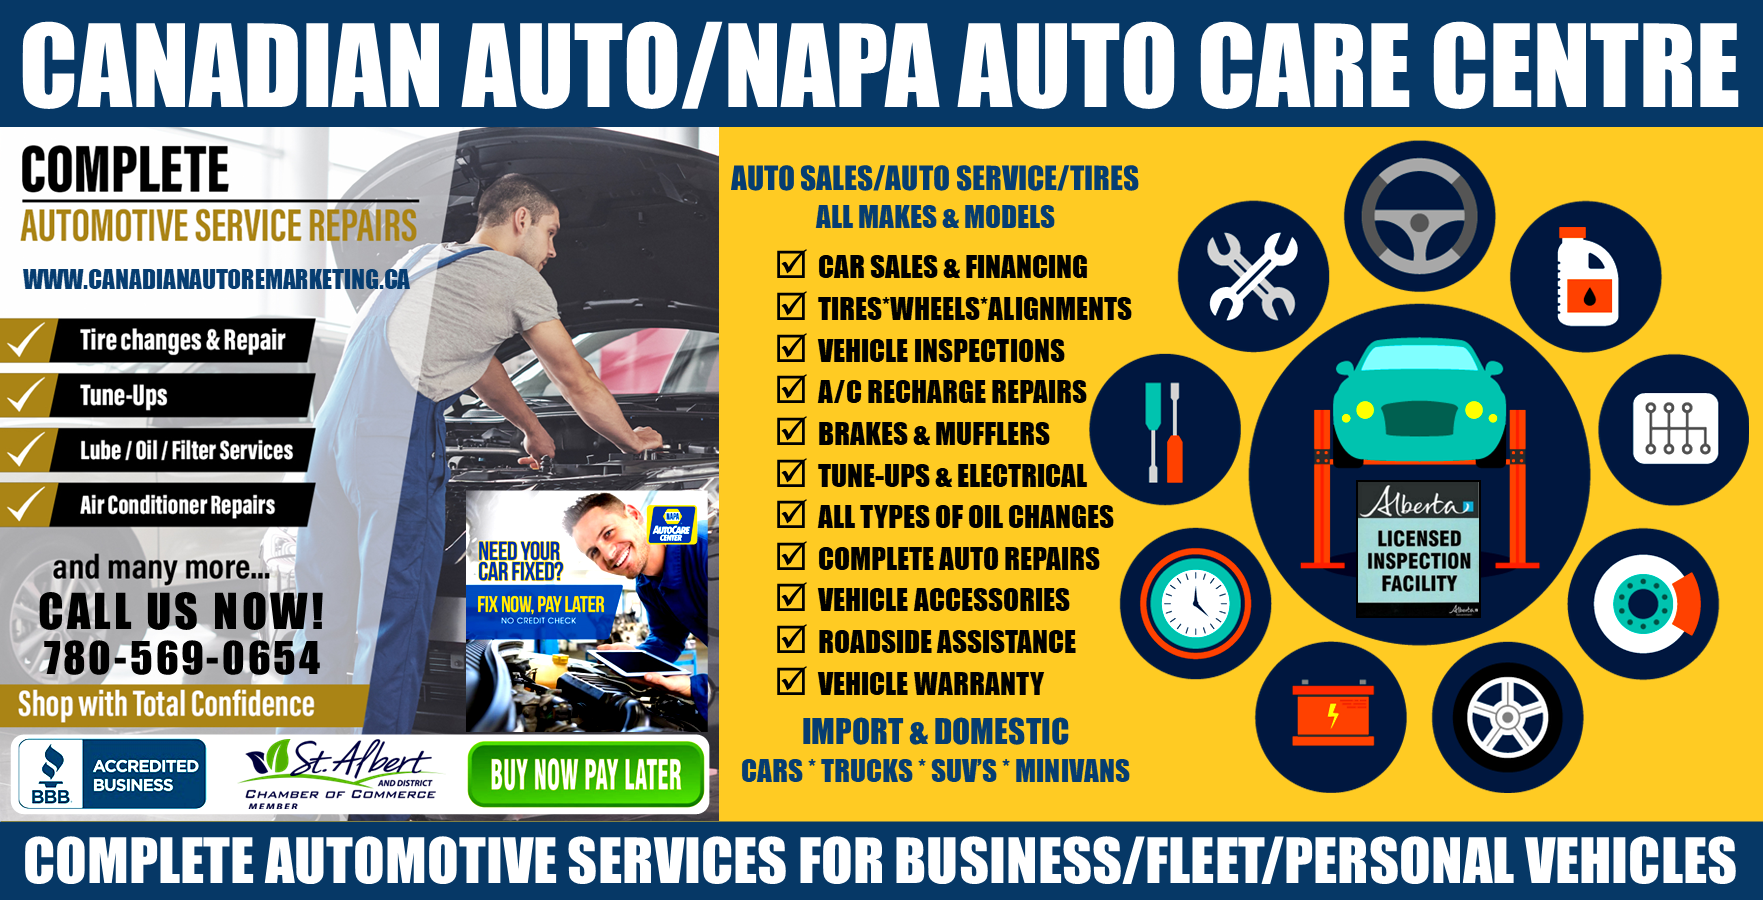 Complete automotive service repairs.